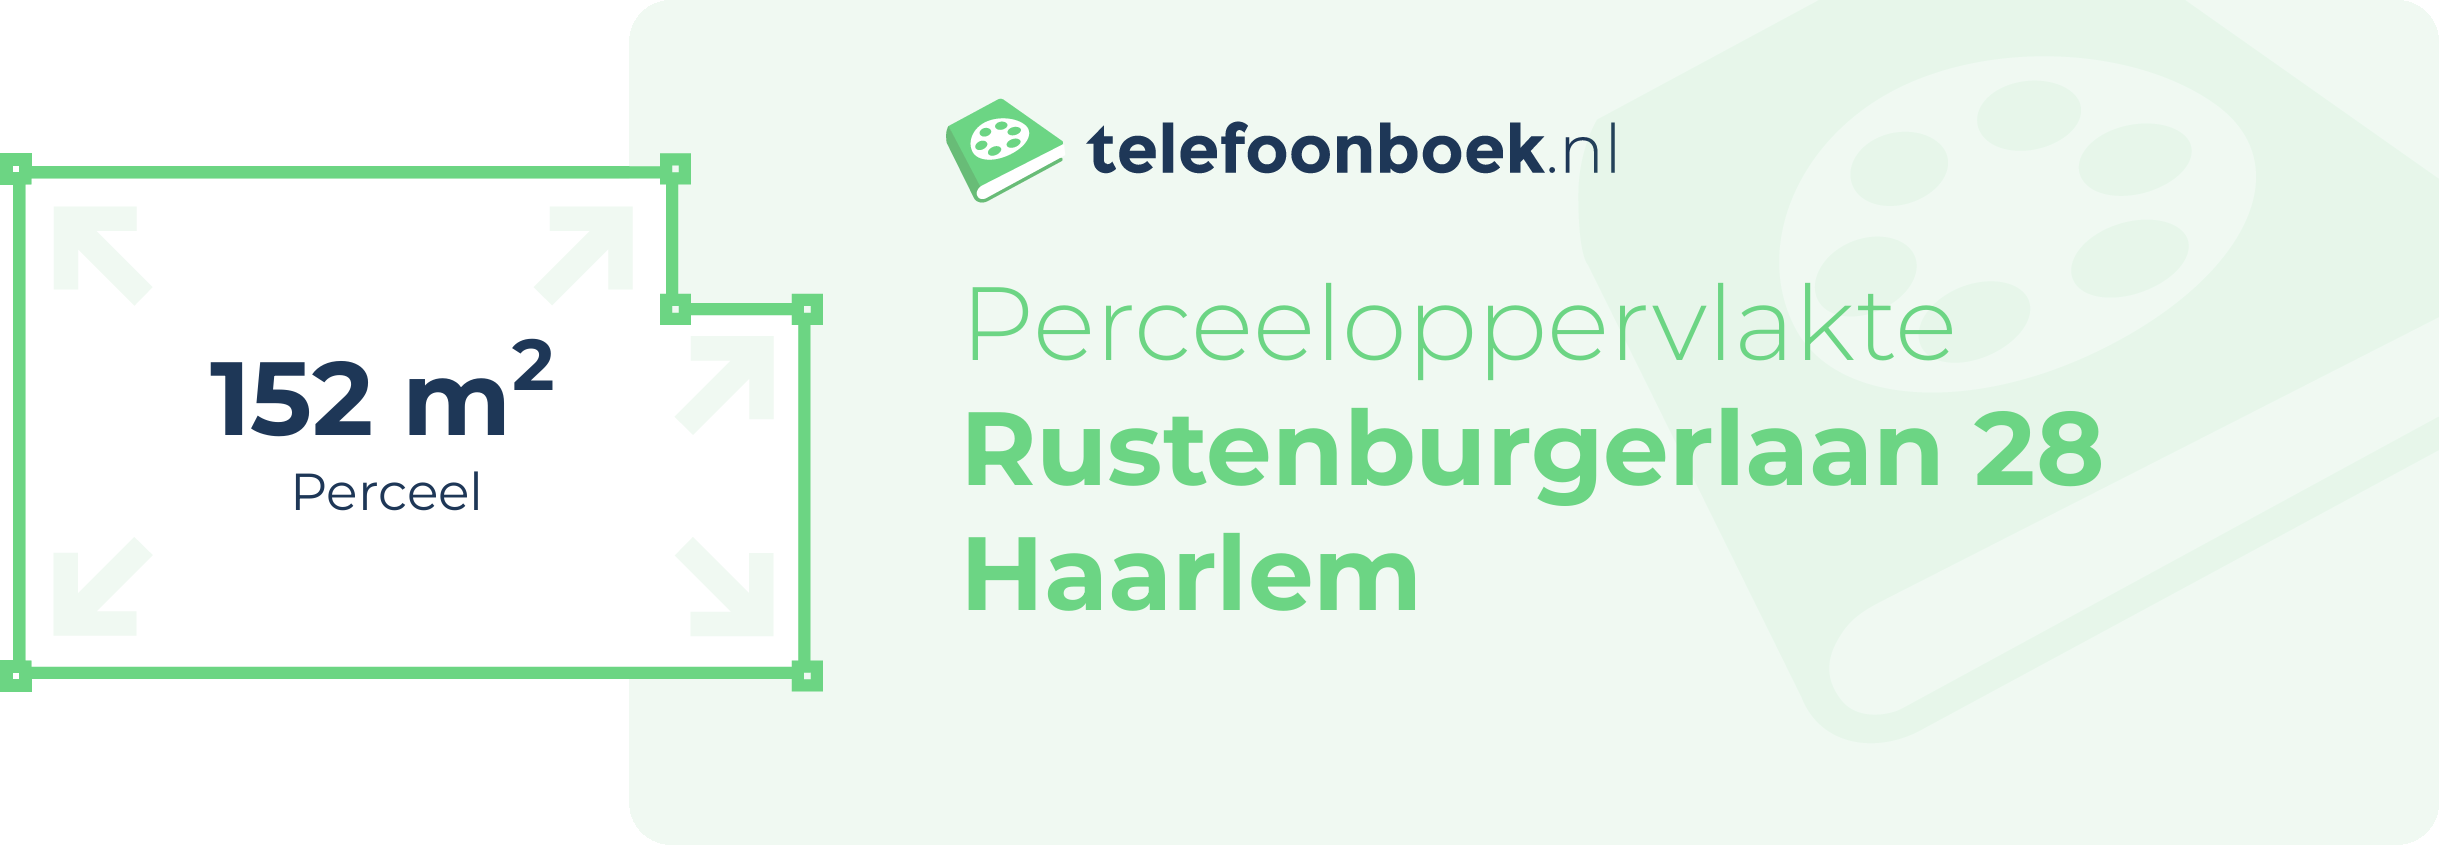 Perceeloppervlakte Rustenburgerlaan 28 Haarlem